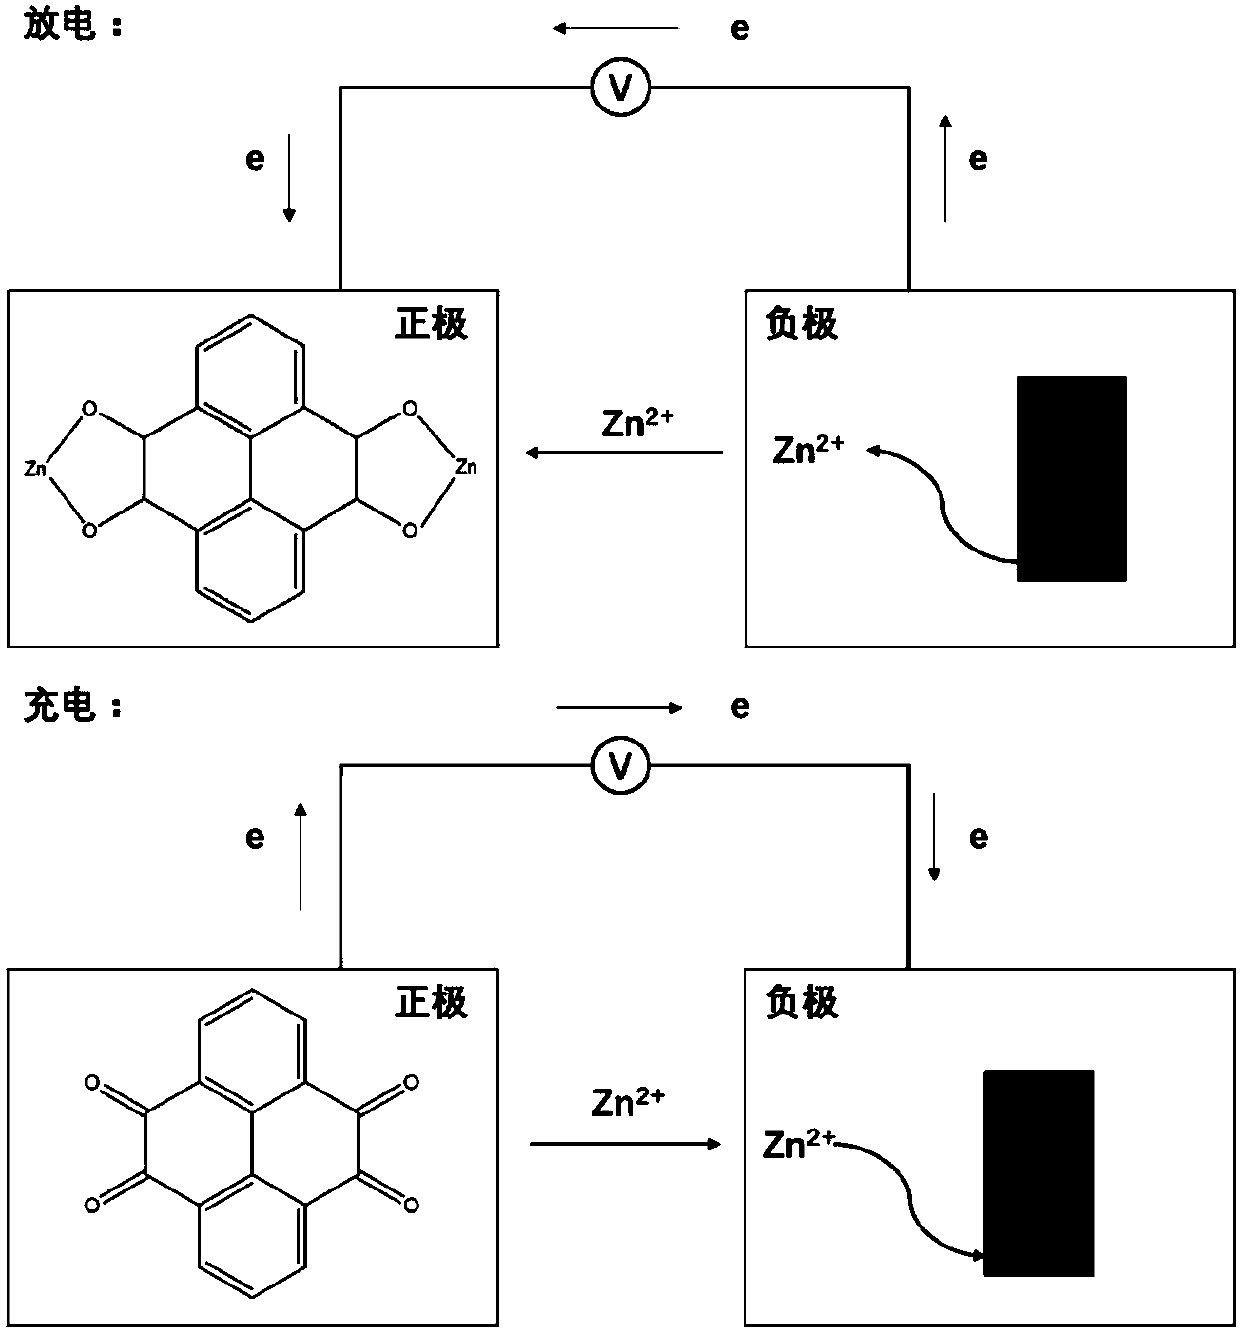 Aqueous zinc ion battery based on pyrene-4, 5, 9, 10-tetrone positive electrode and zinc negative electrode